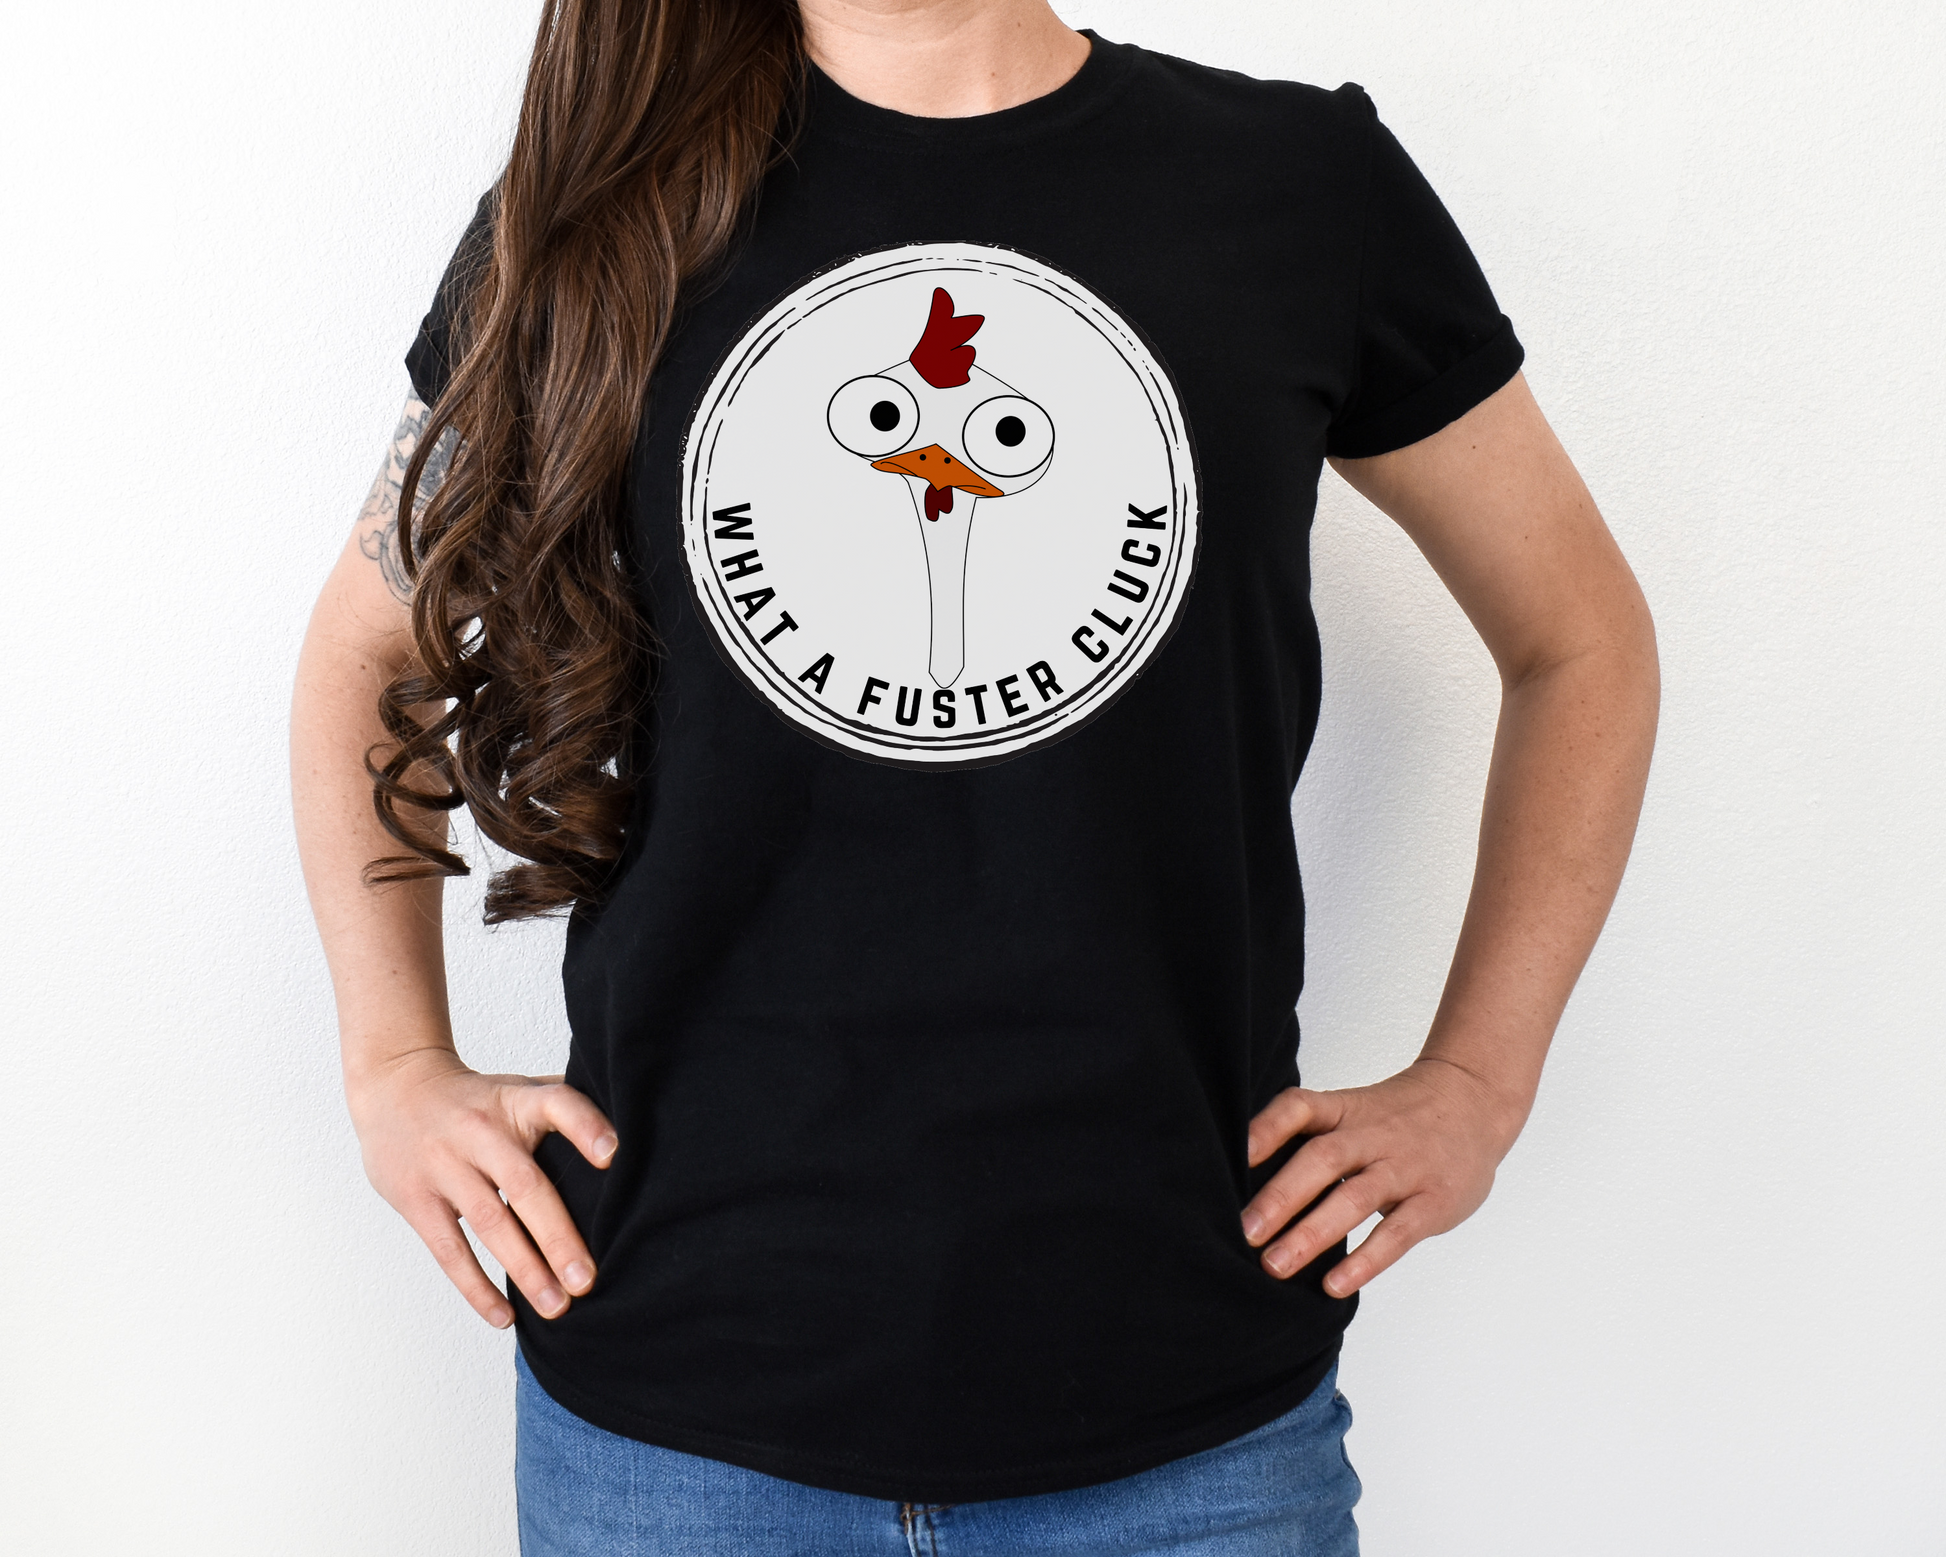 Fuster Cluck Black Chicken Shirt - Chicken Gift - funny chicken shirt